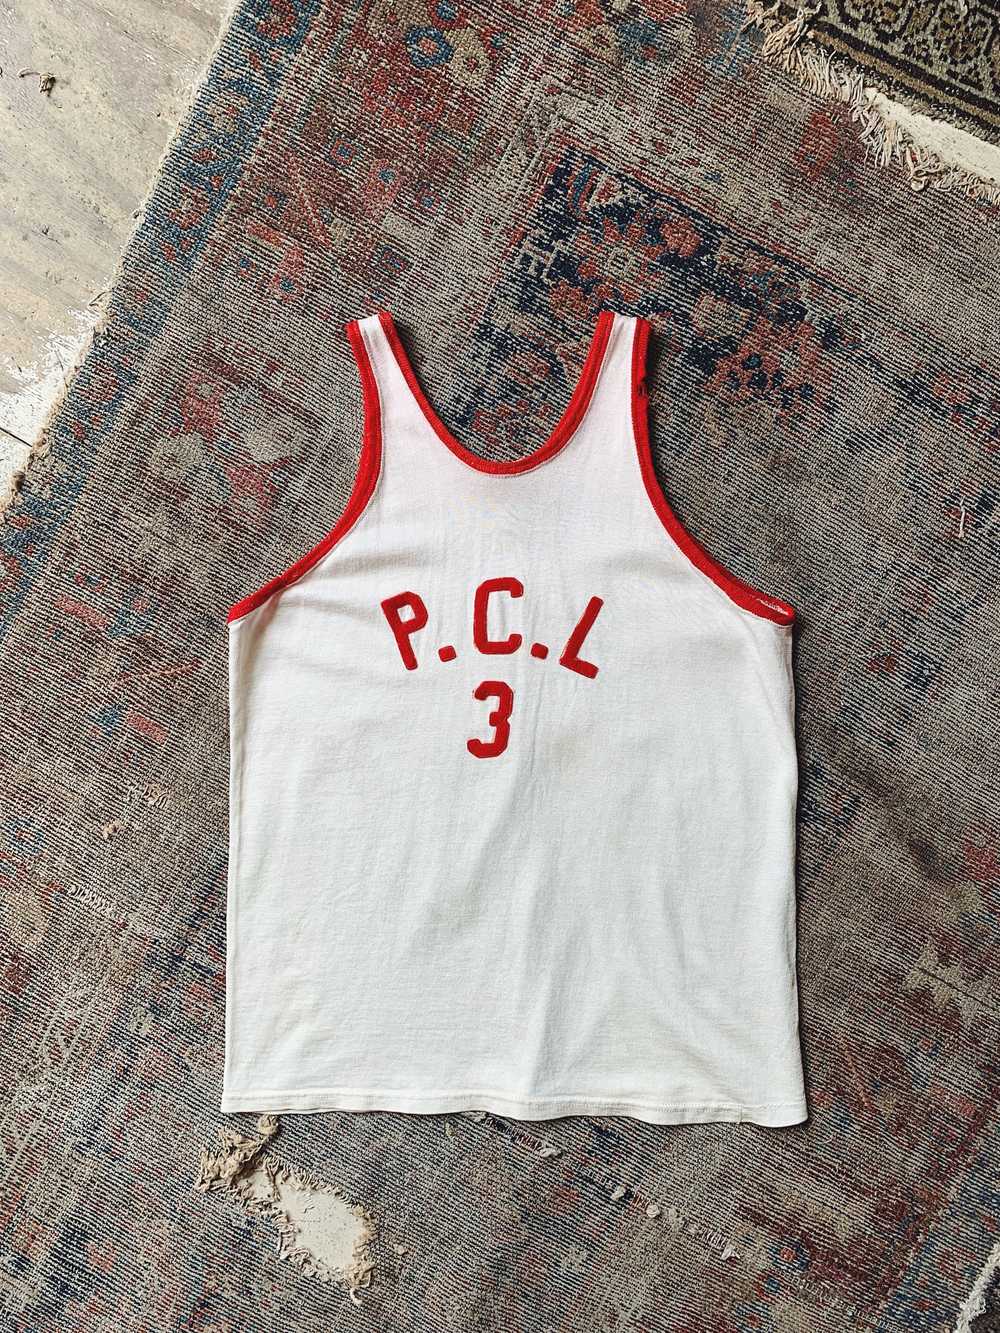 Vintage “P.C.L.” Basketball Jersey - image 1